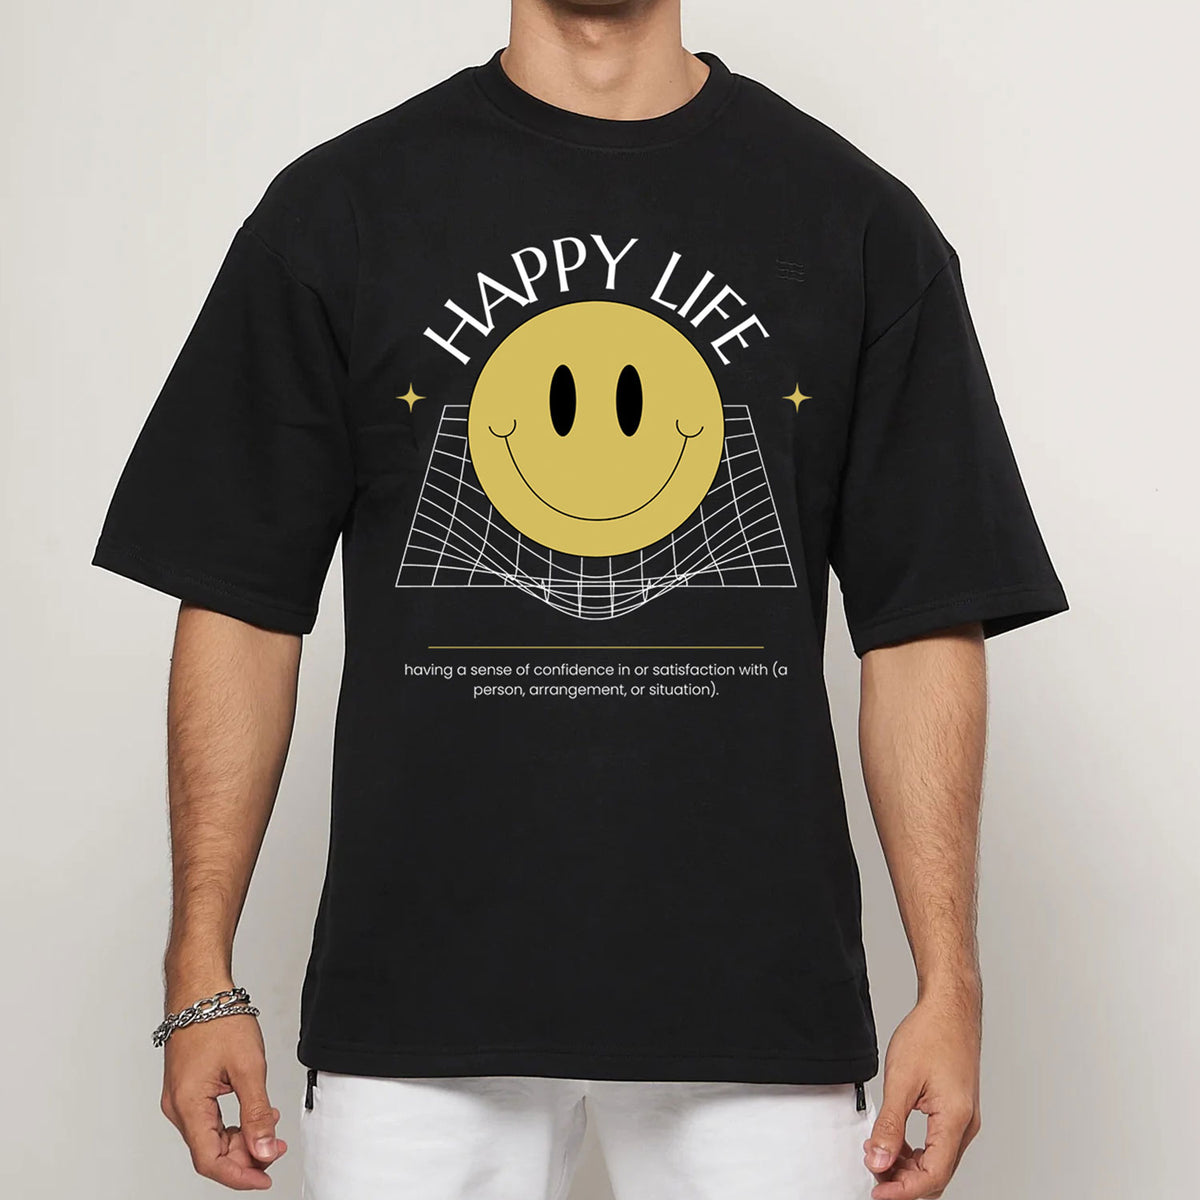 Men's Black Happy Life Printed T-shirt